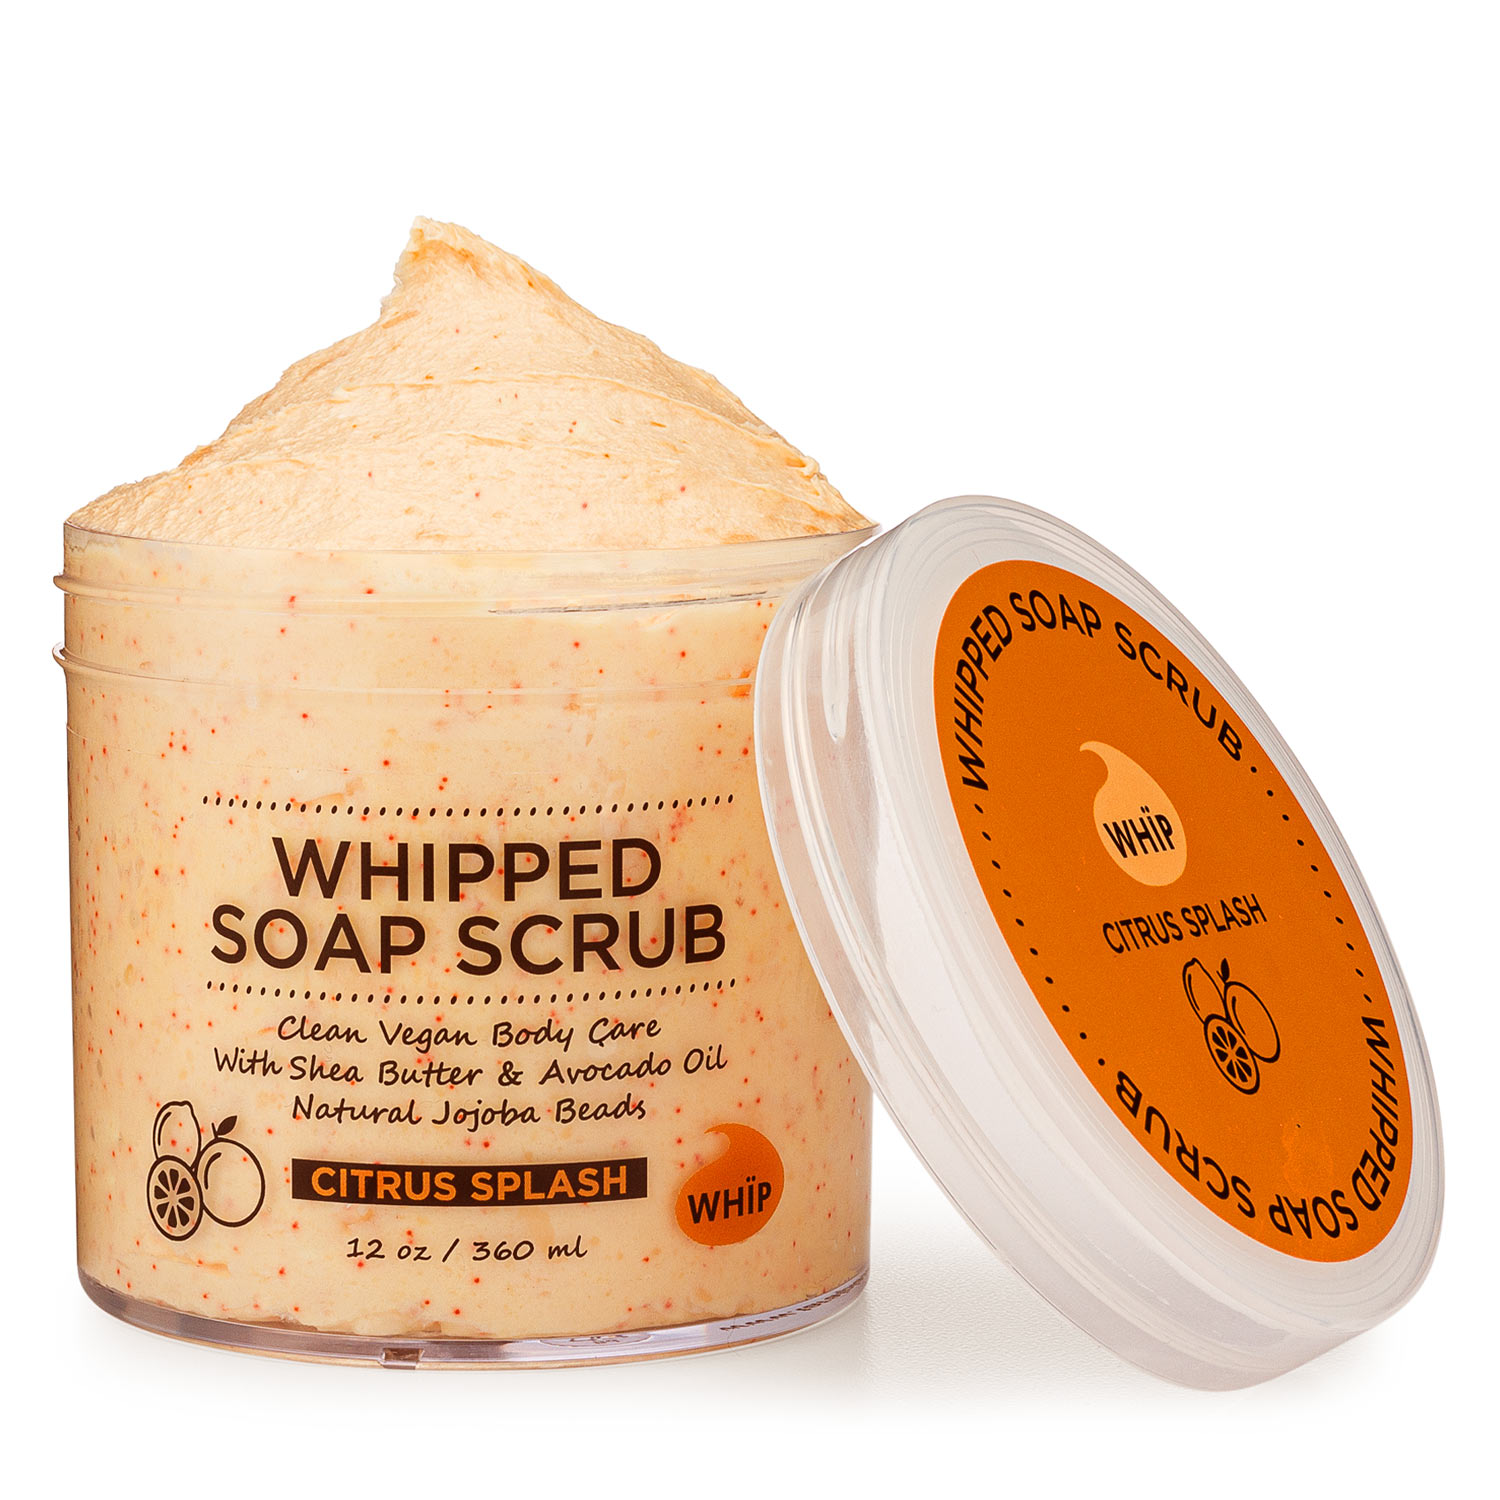 Whipped-Soap-Scrub---Citrus-Splash-WHÏP